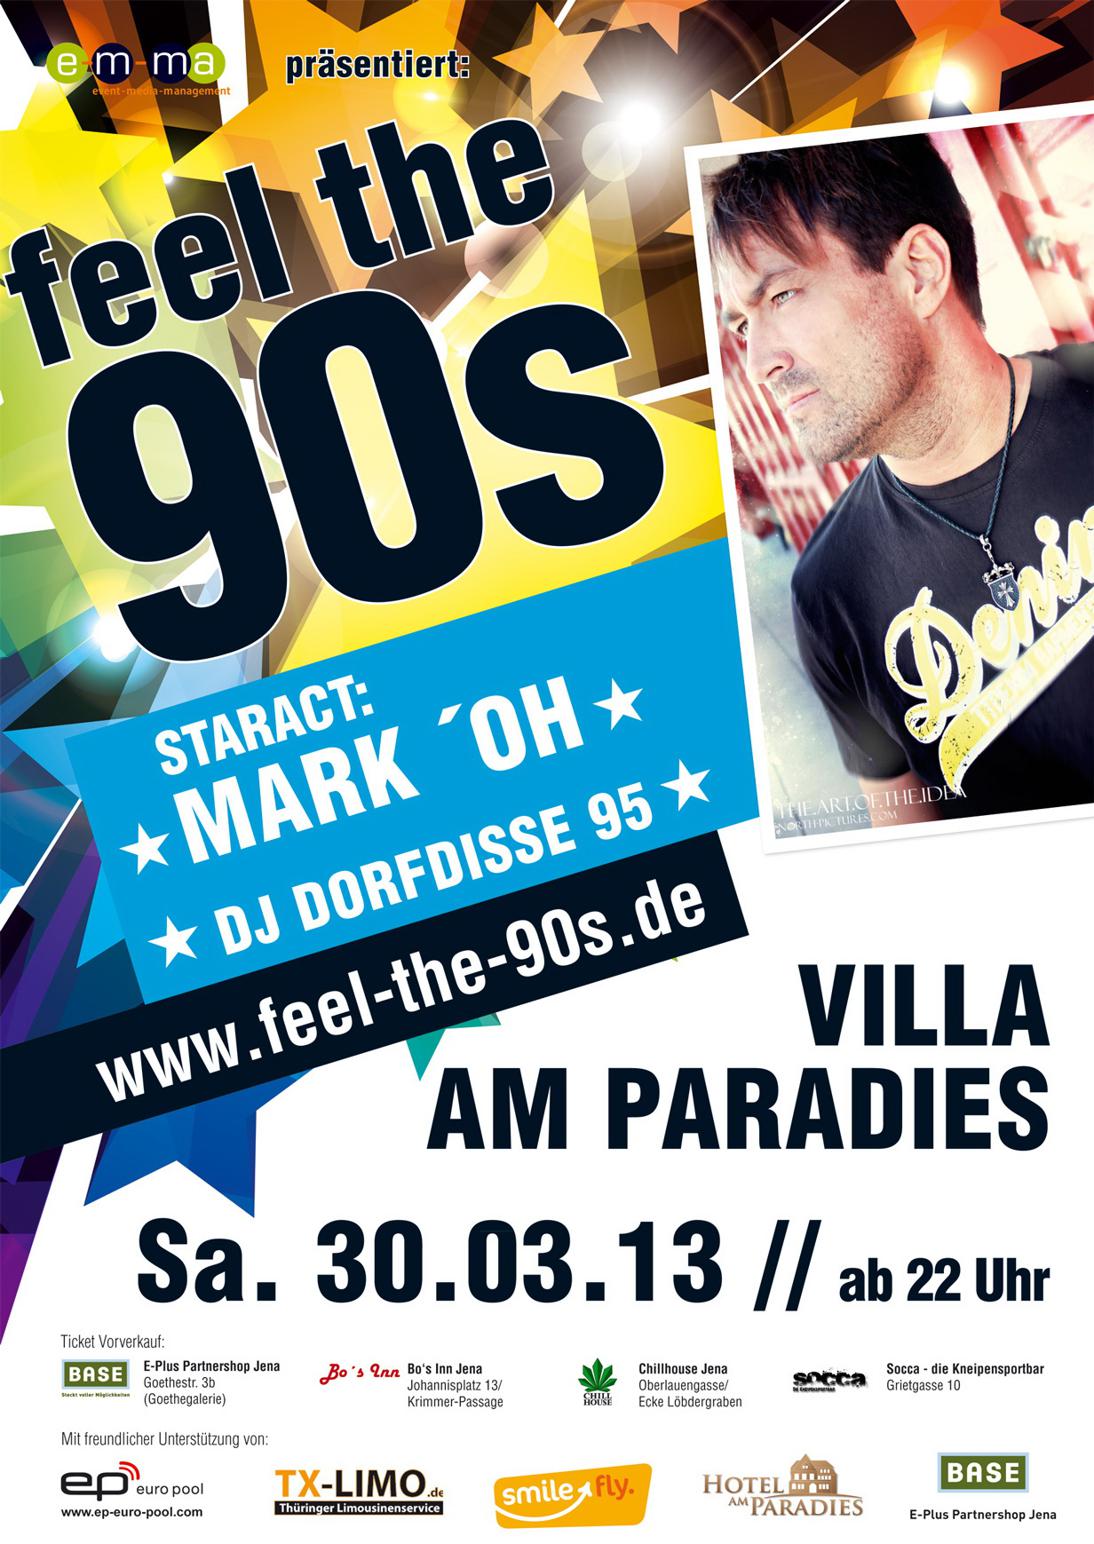 FEEL THE 90s - Staract: Mark 'Oh LIVE, Star DJ: Dorfdisse 95